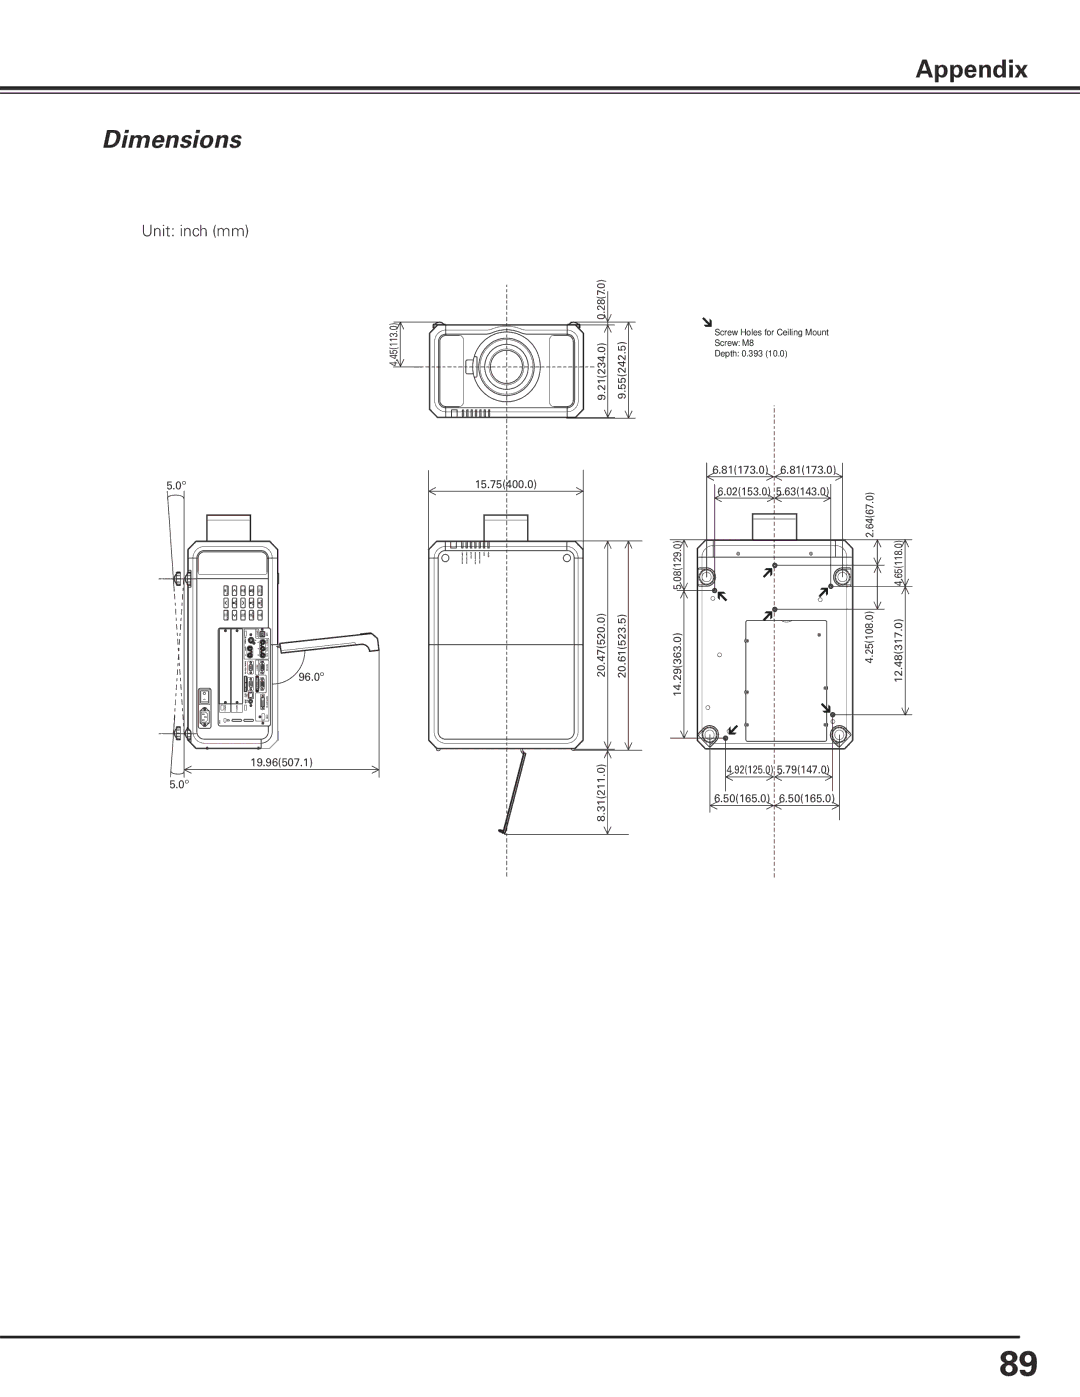 Sanyo PDG-DHT8000L owner manual Dimensions, Unit inch mm 